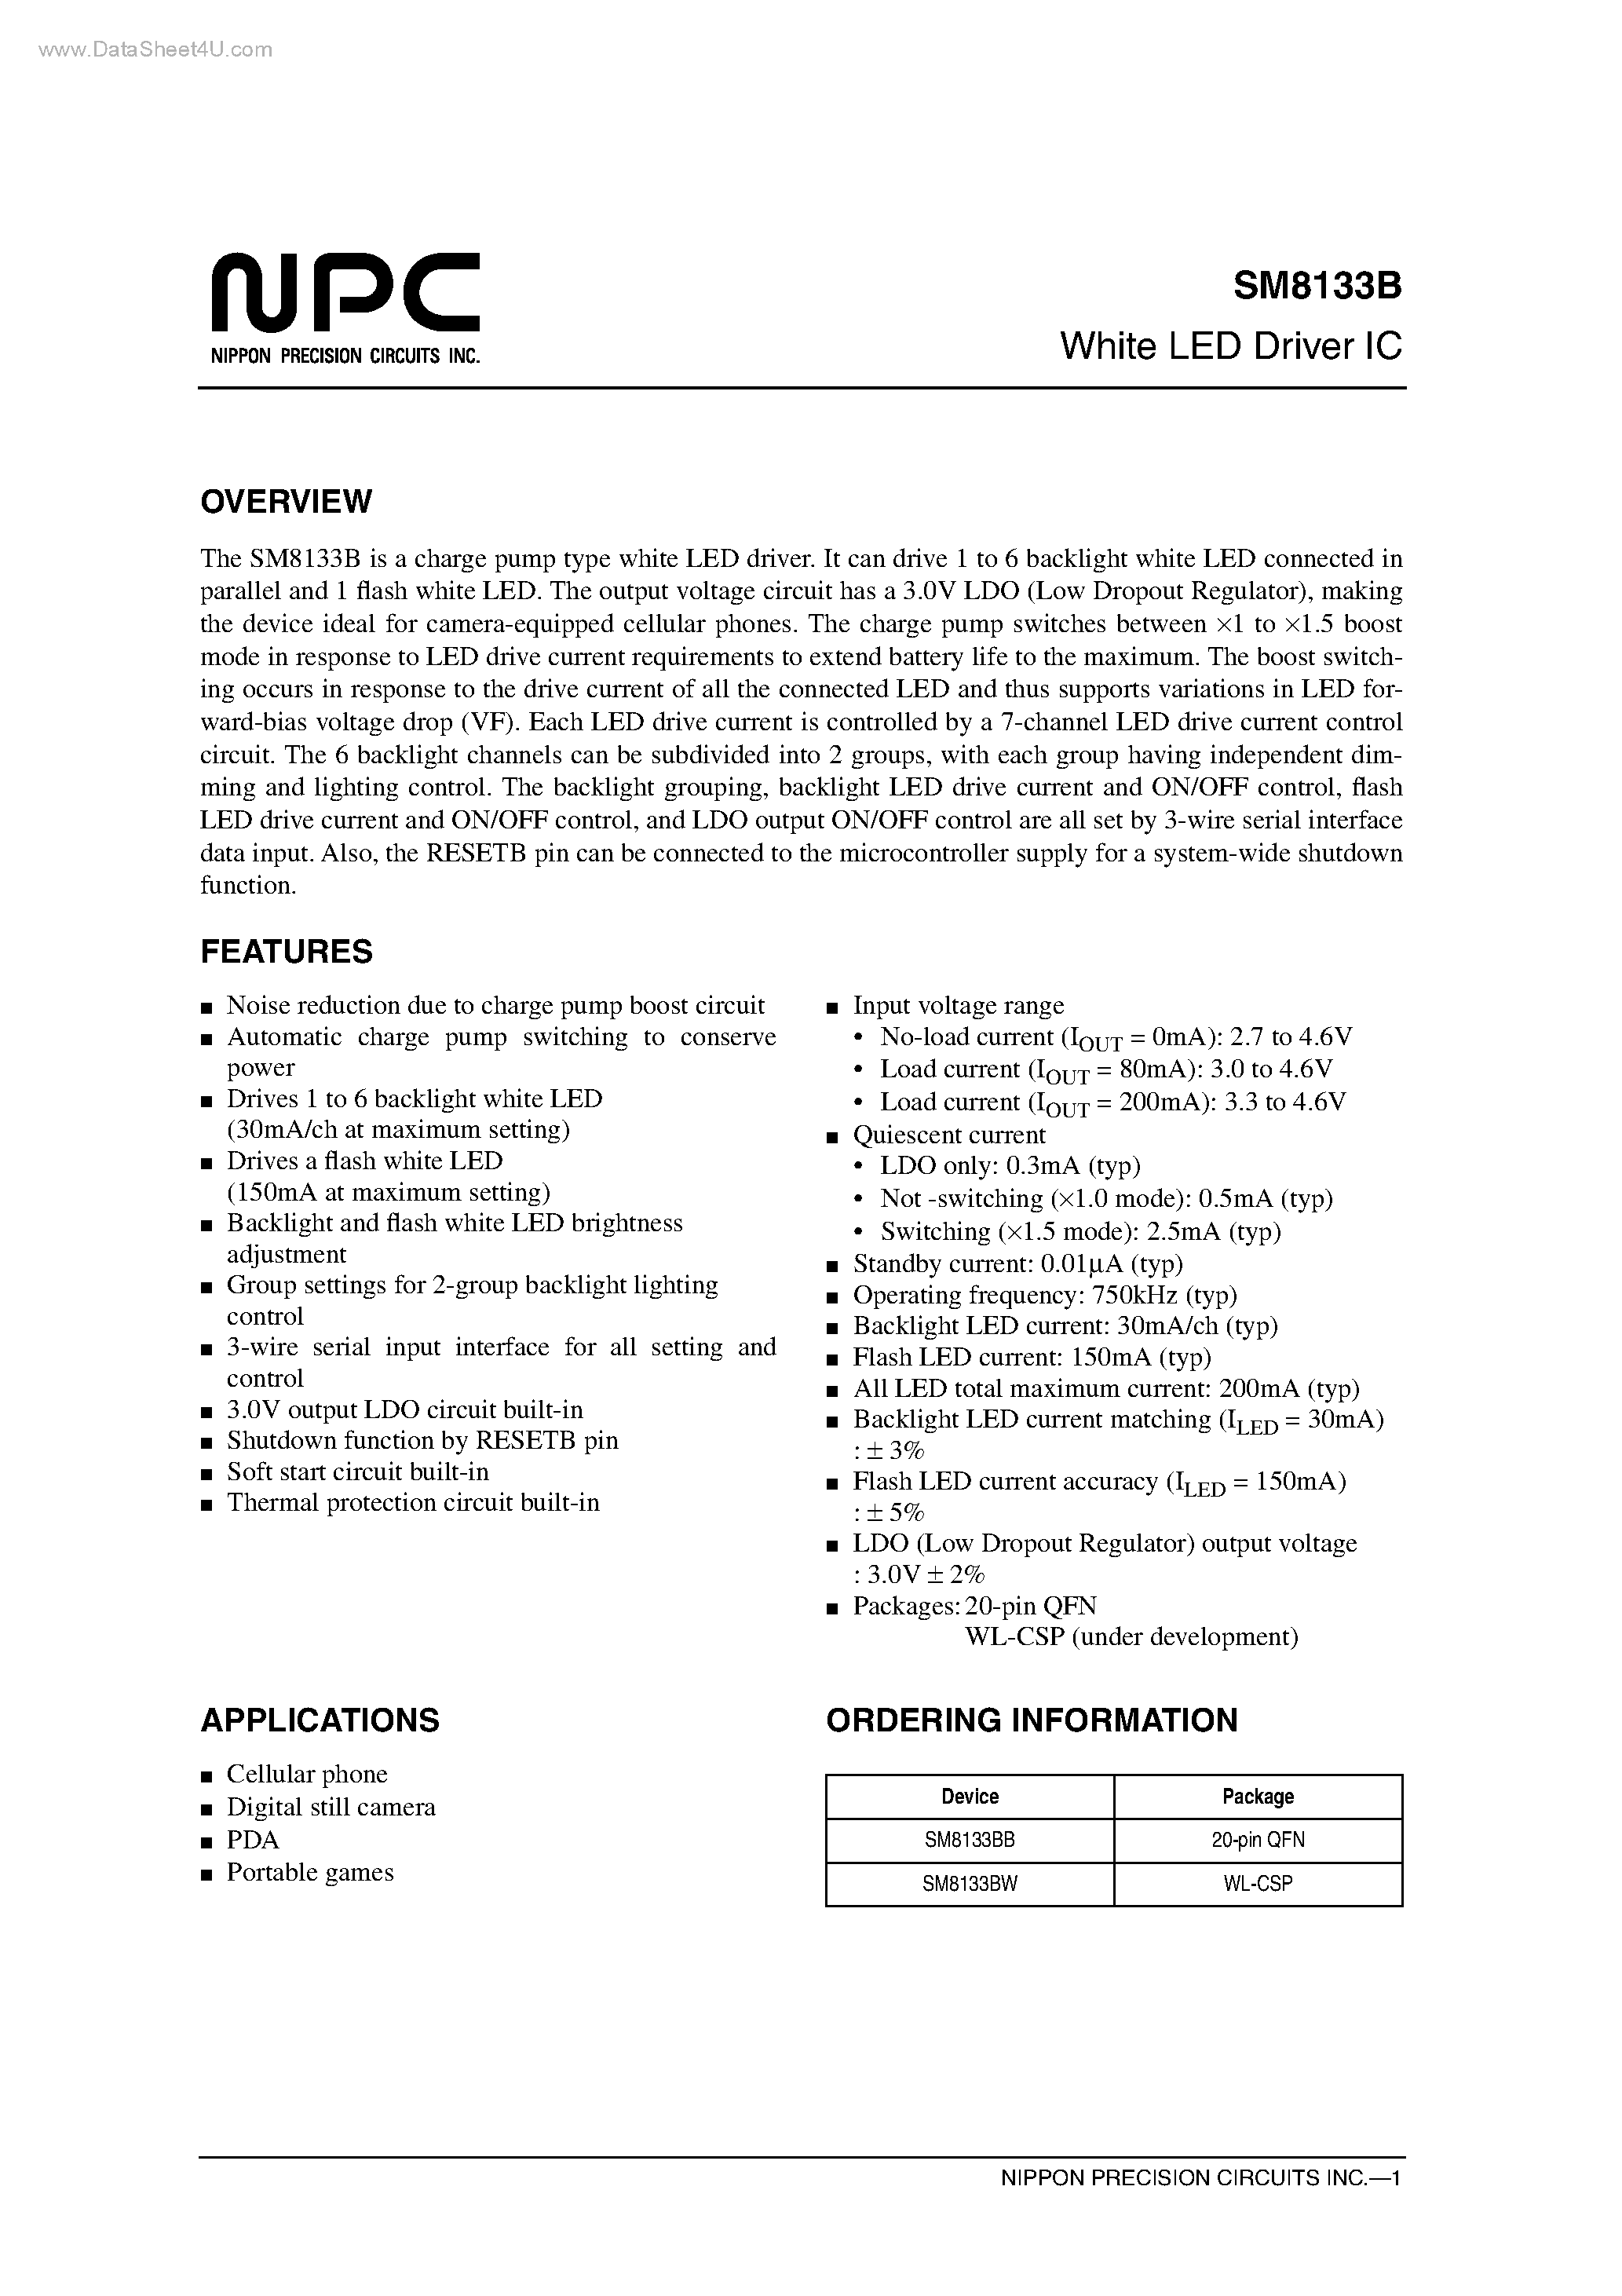 Datasheet SM8133B - White LED Driver IC page 1